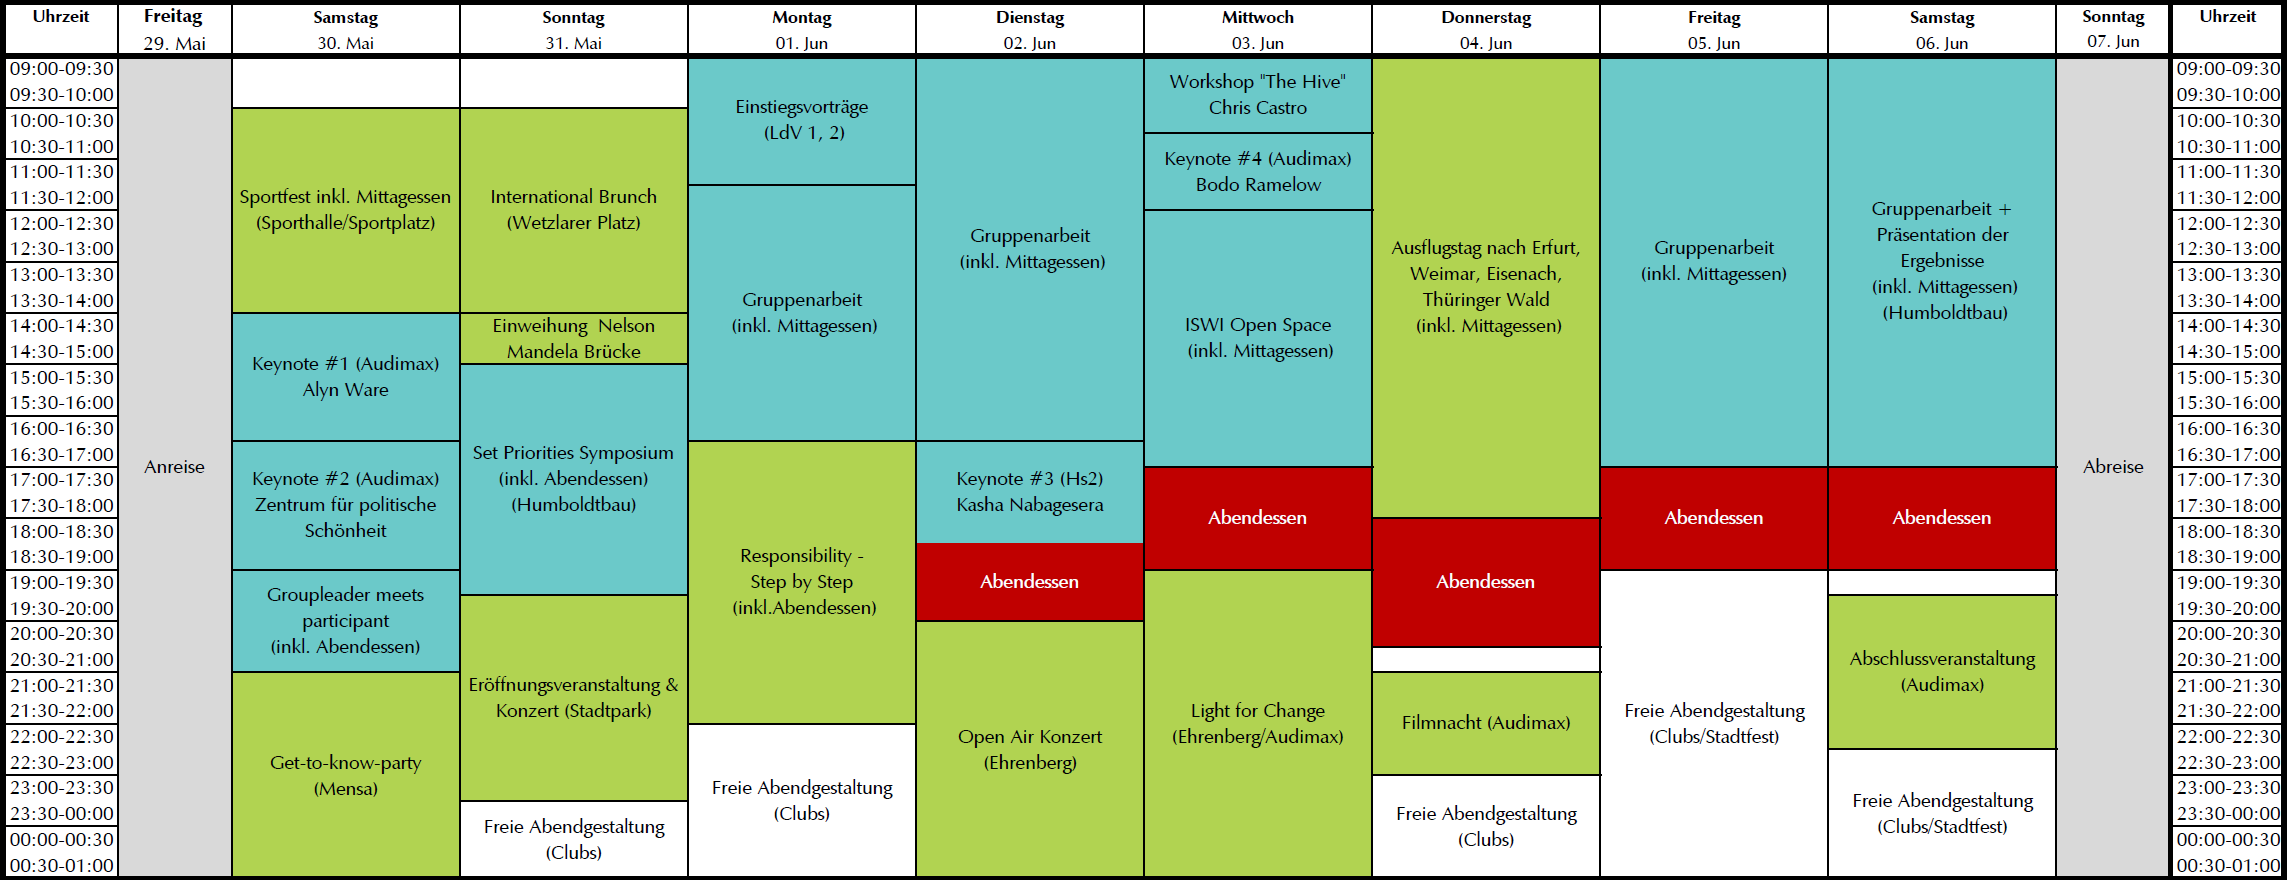 Zeitplan der ISWI 2015 (Mai 2015)